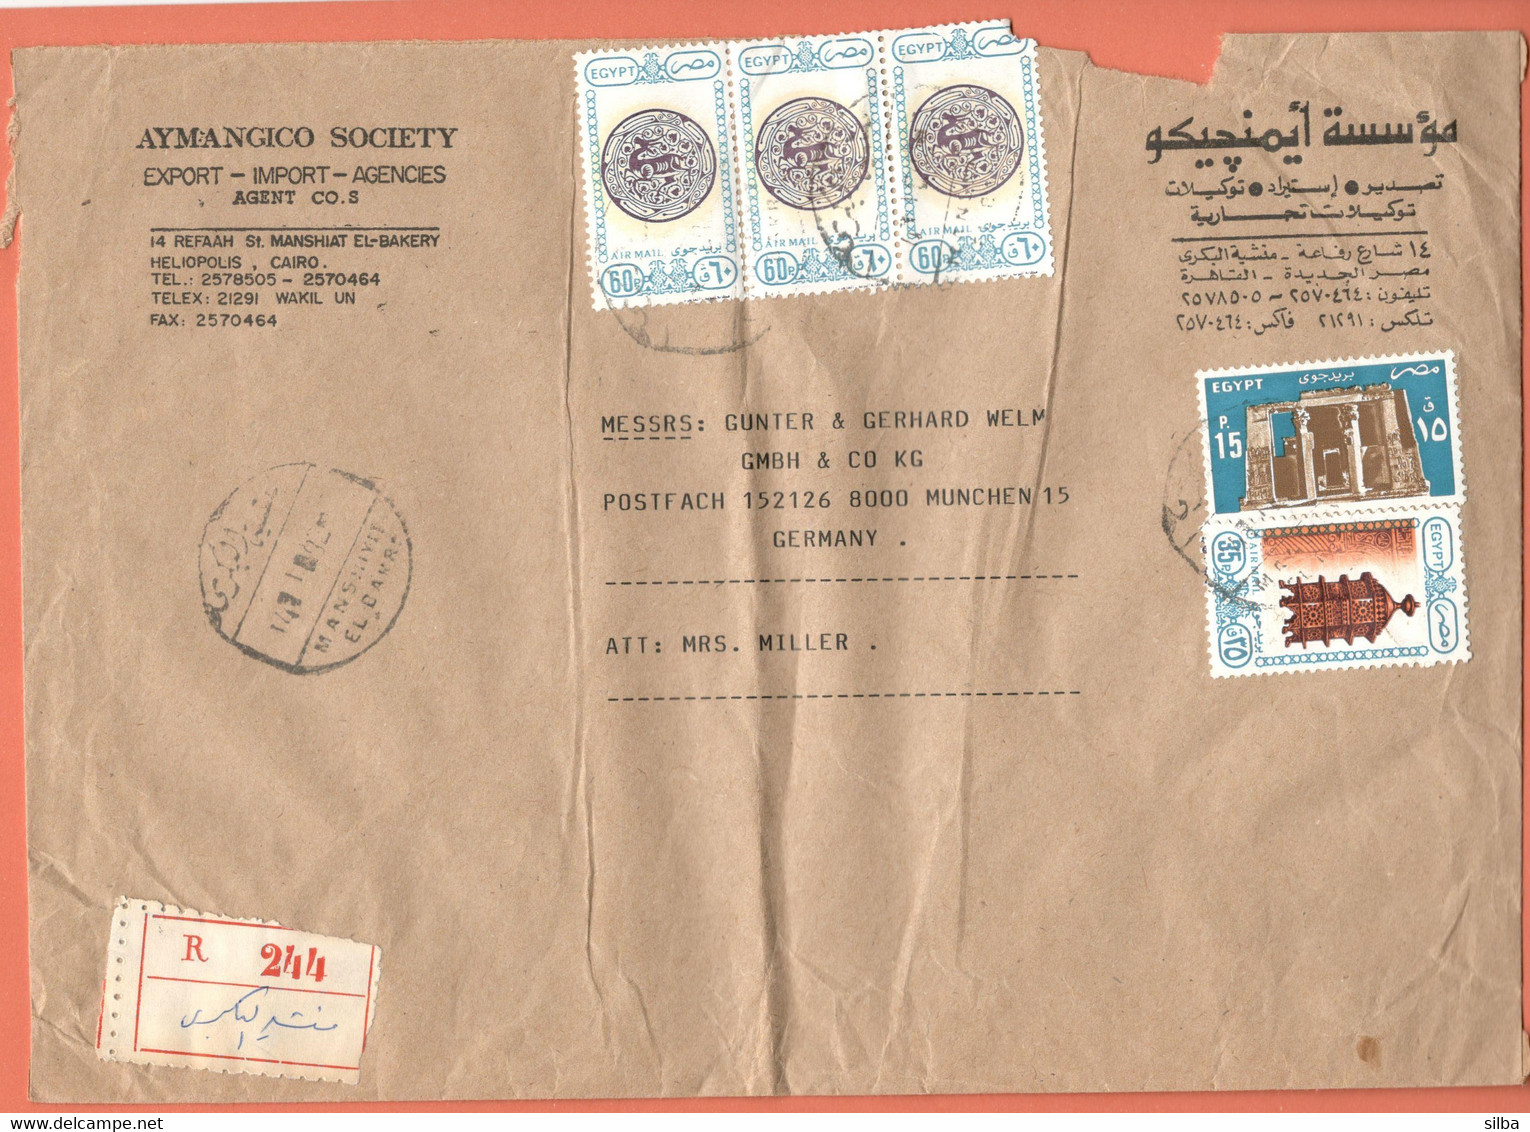 Egypt / Airmail - Art And Mosques, Lantern 35 P, Dish With Gazelle Motif - 60 P, 1989, Edfu Temple, 15 P, 1985 - Cartas & Documentos